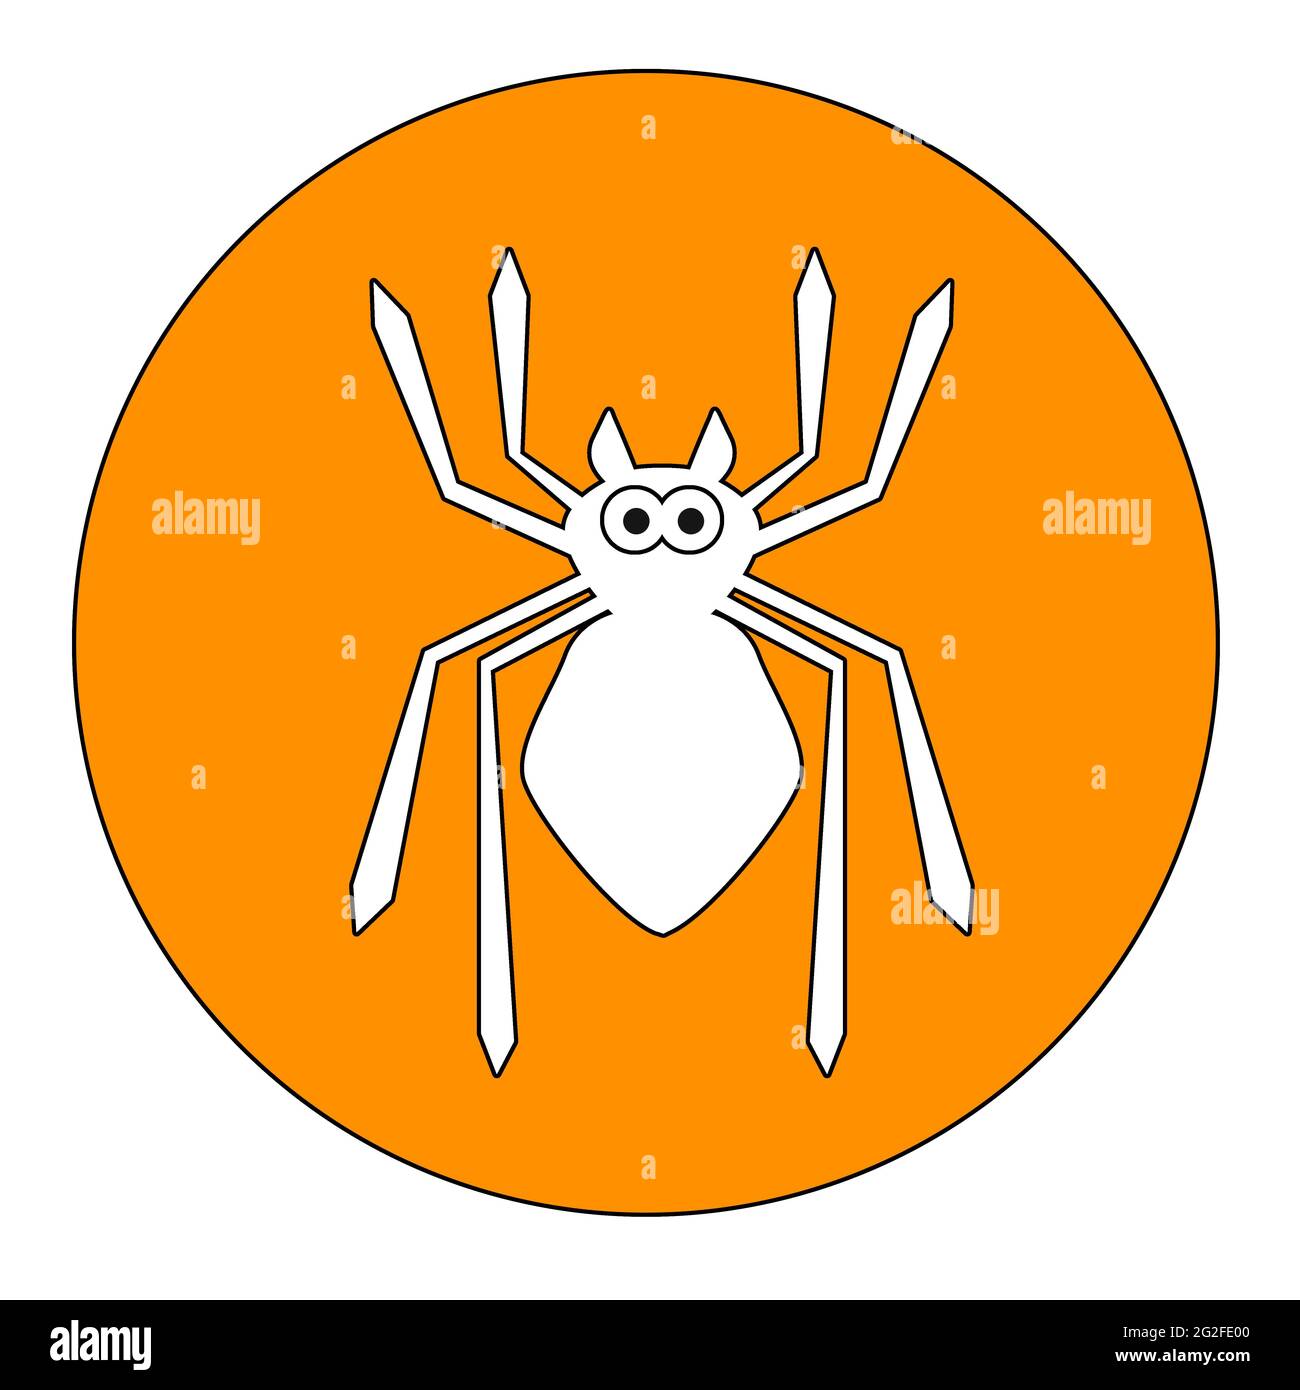 Spider on an orange background, 3D rendering Stock Photo